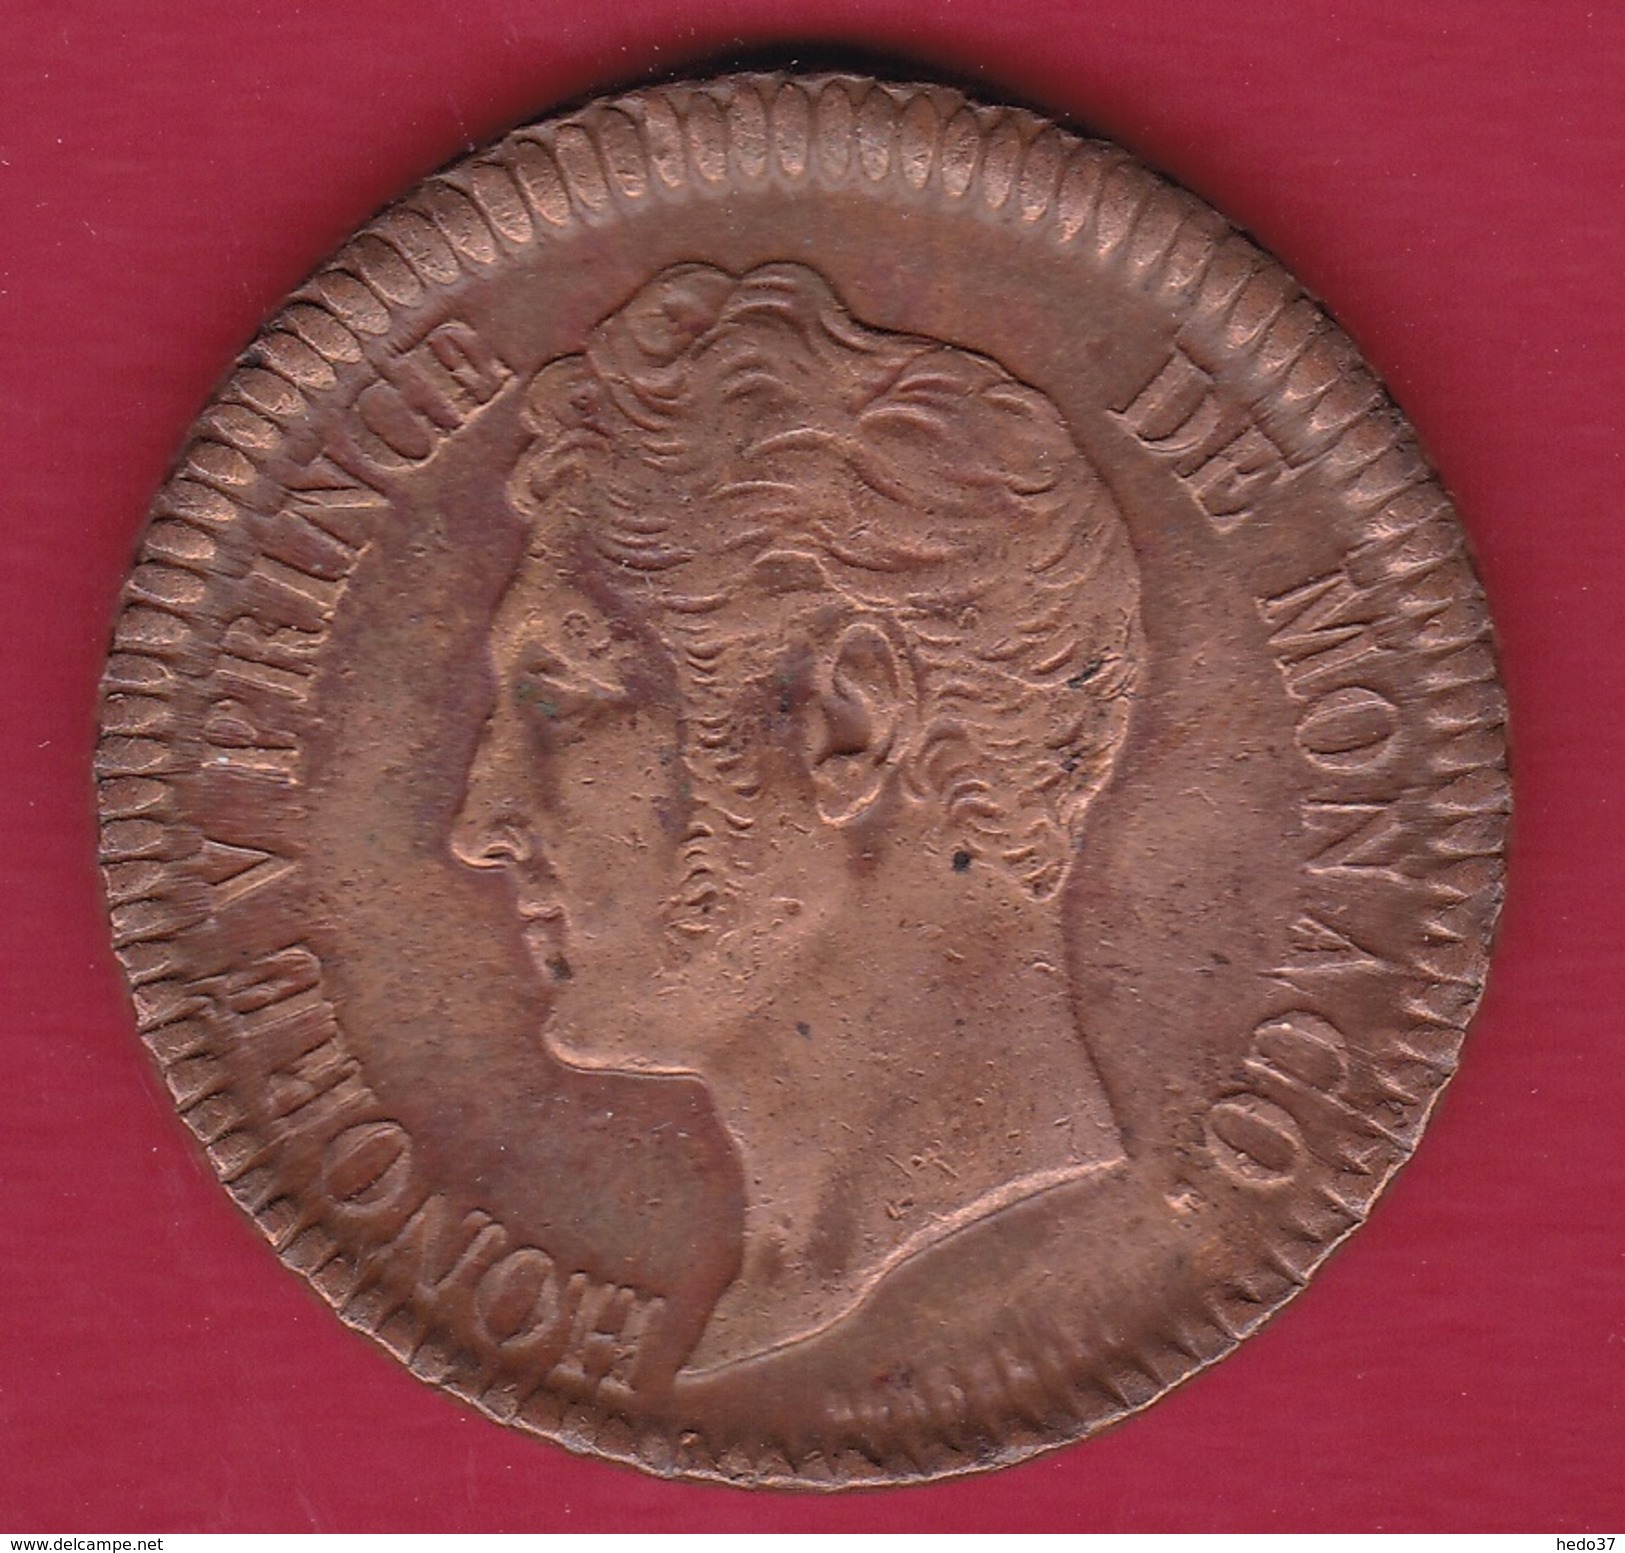 Monaco - Honoré V - Un Décime 1838 MC - SUP - Charles III.